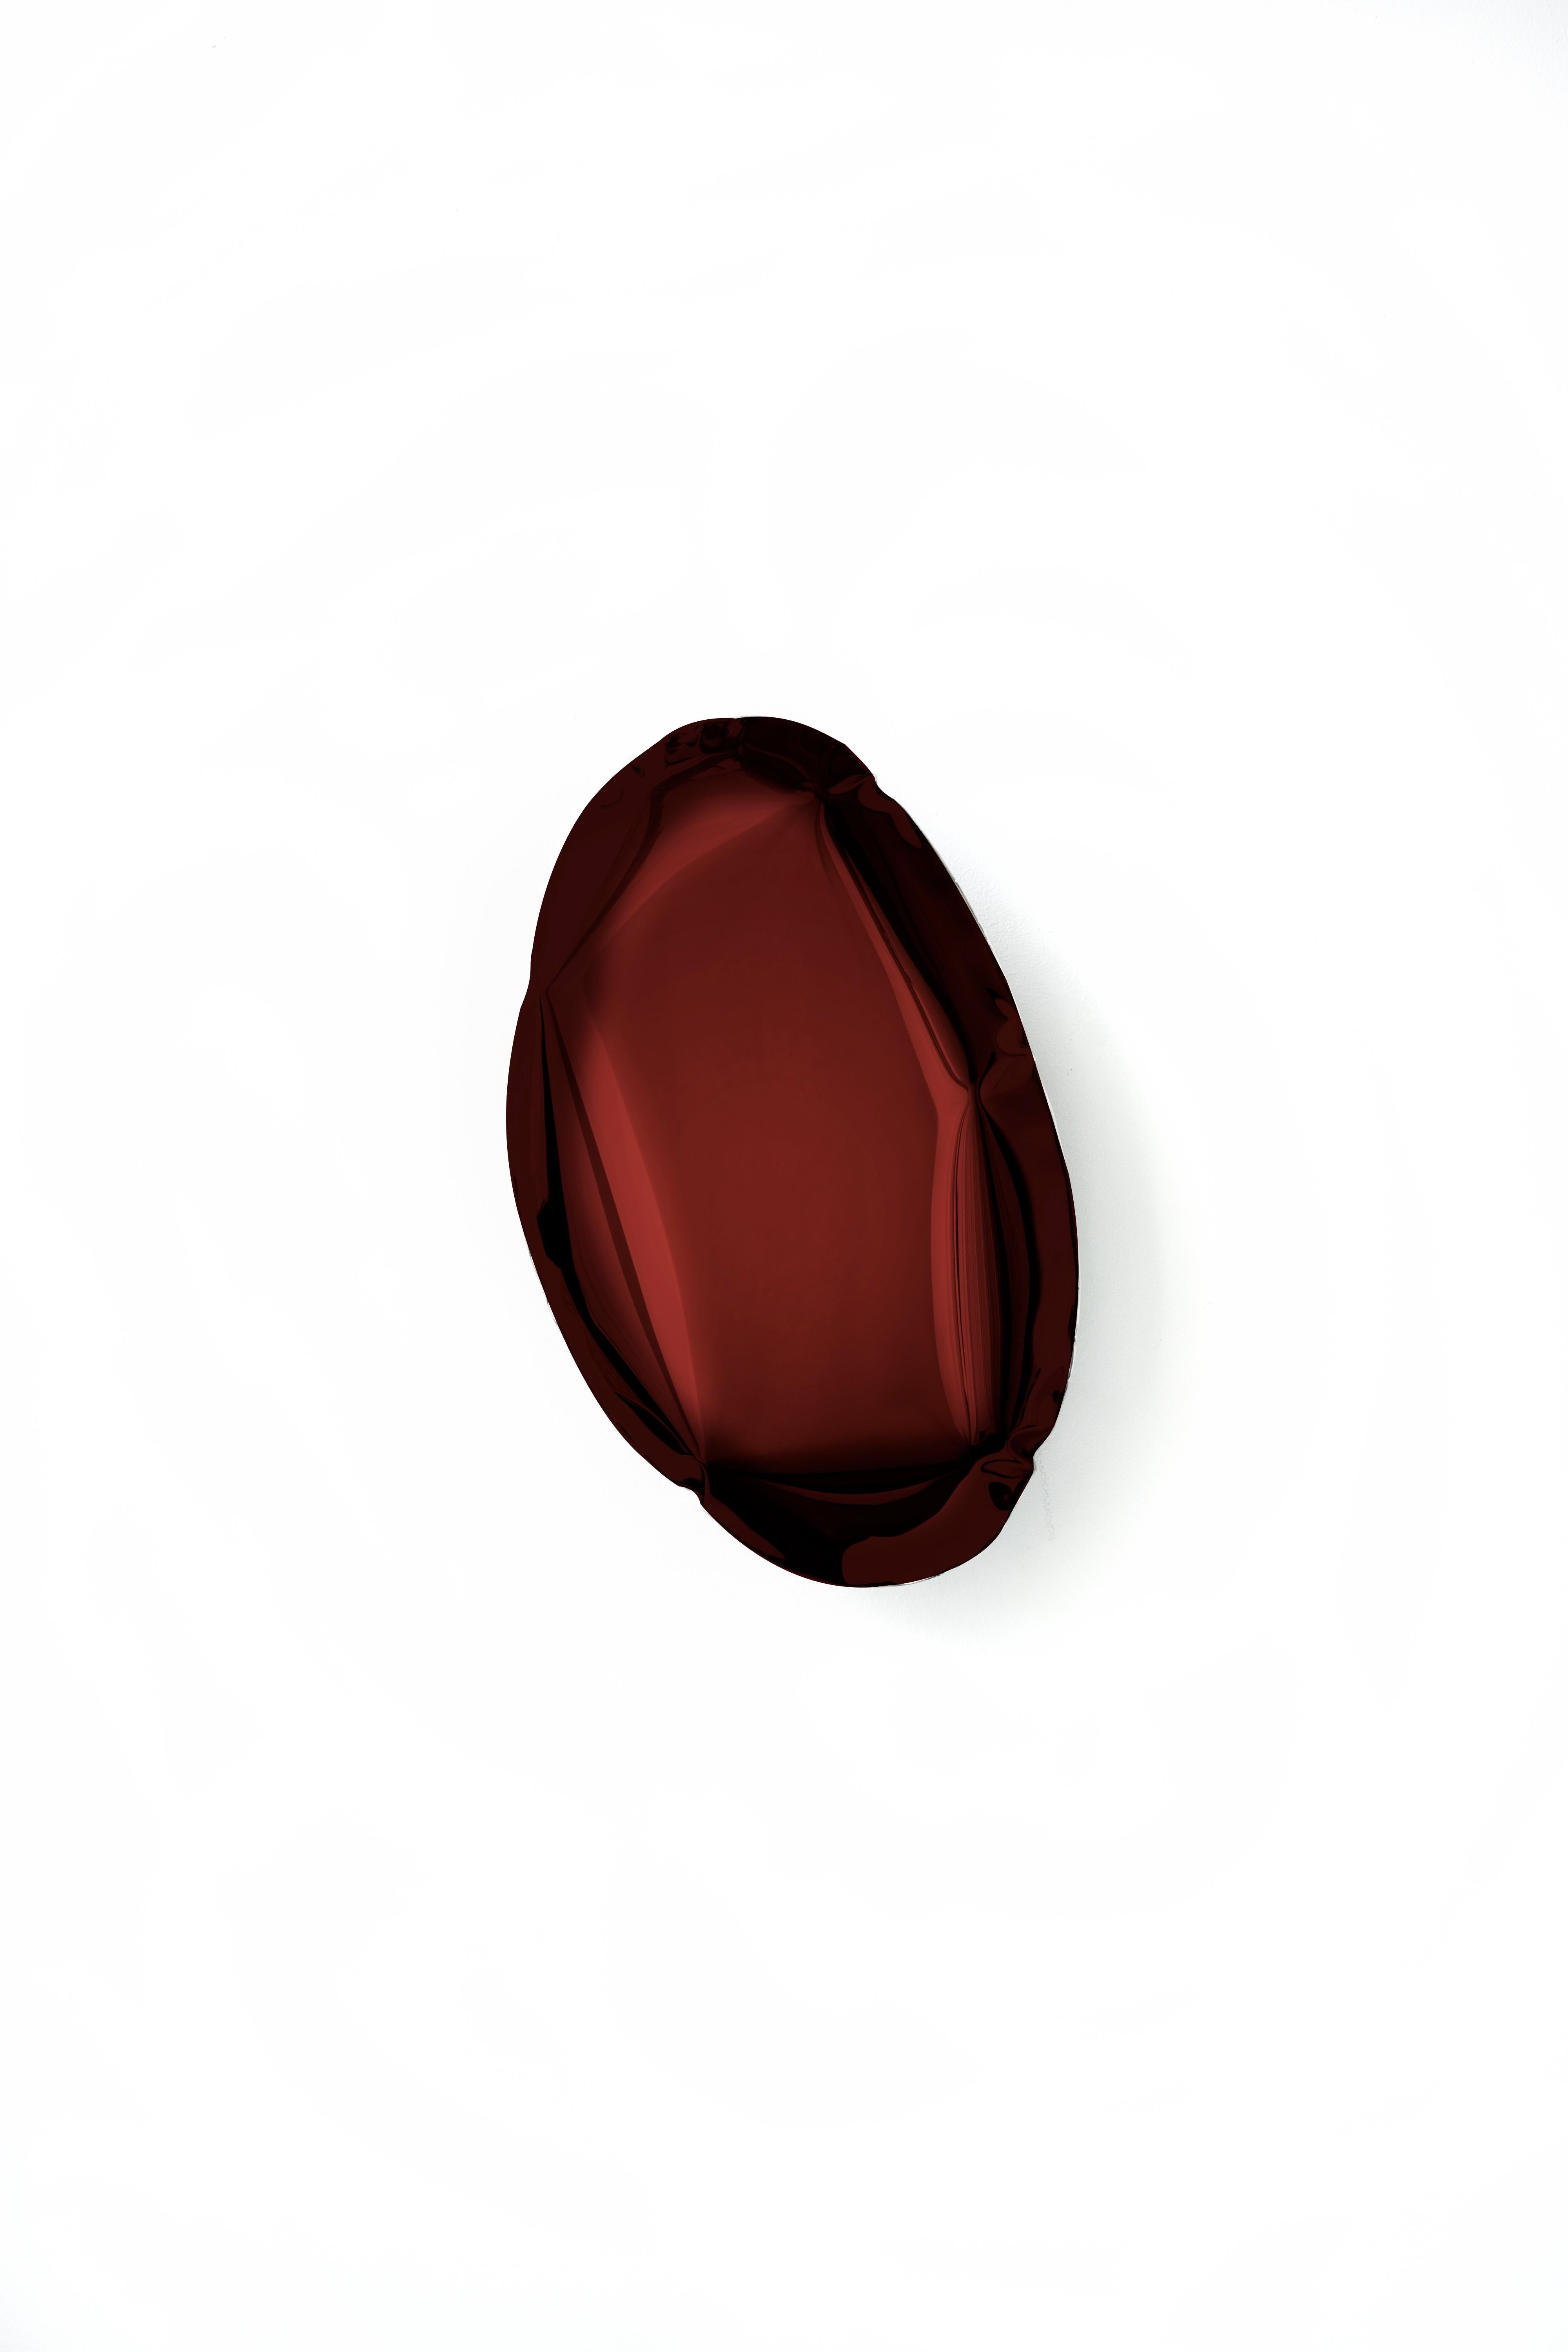 Mirror Tafla O4 Rubin Red, in Polished Stainless Steel by Zieta For Sale 1